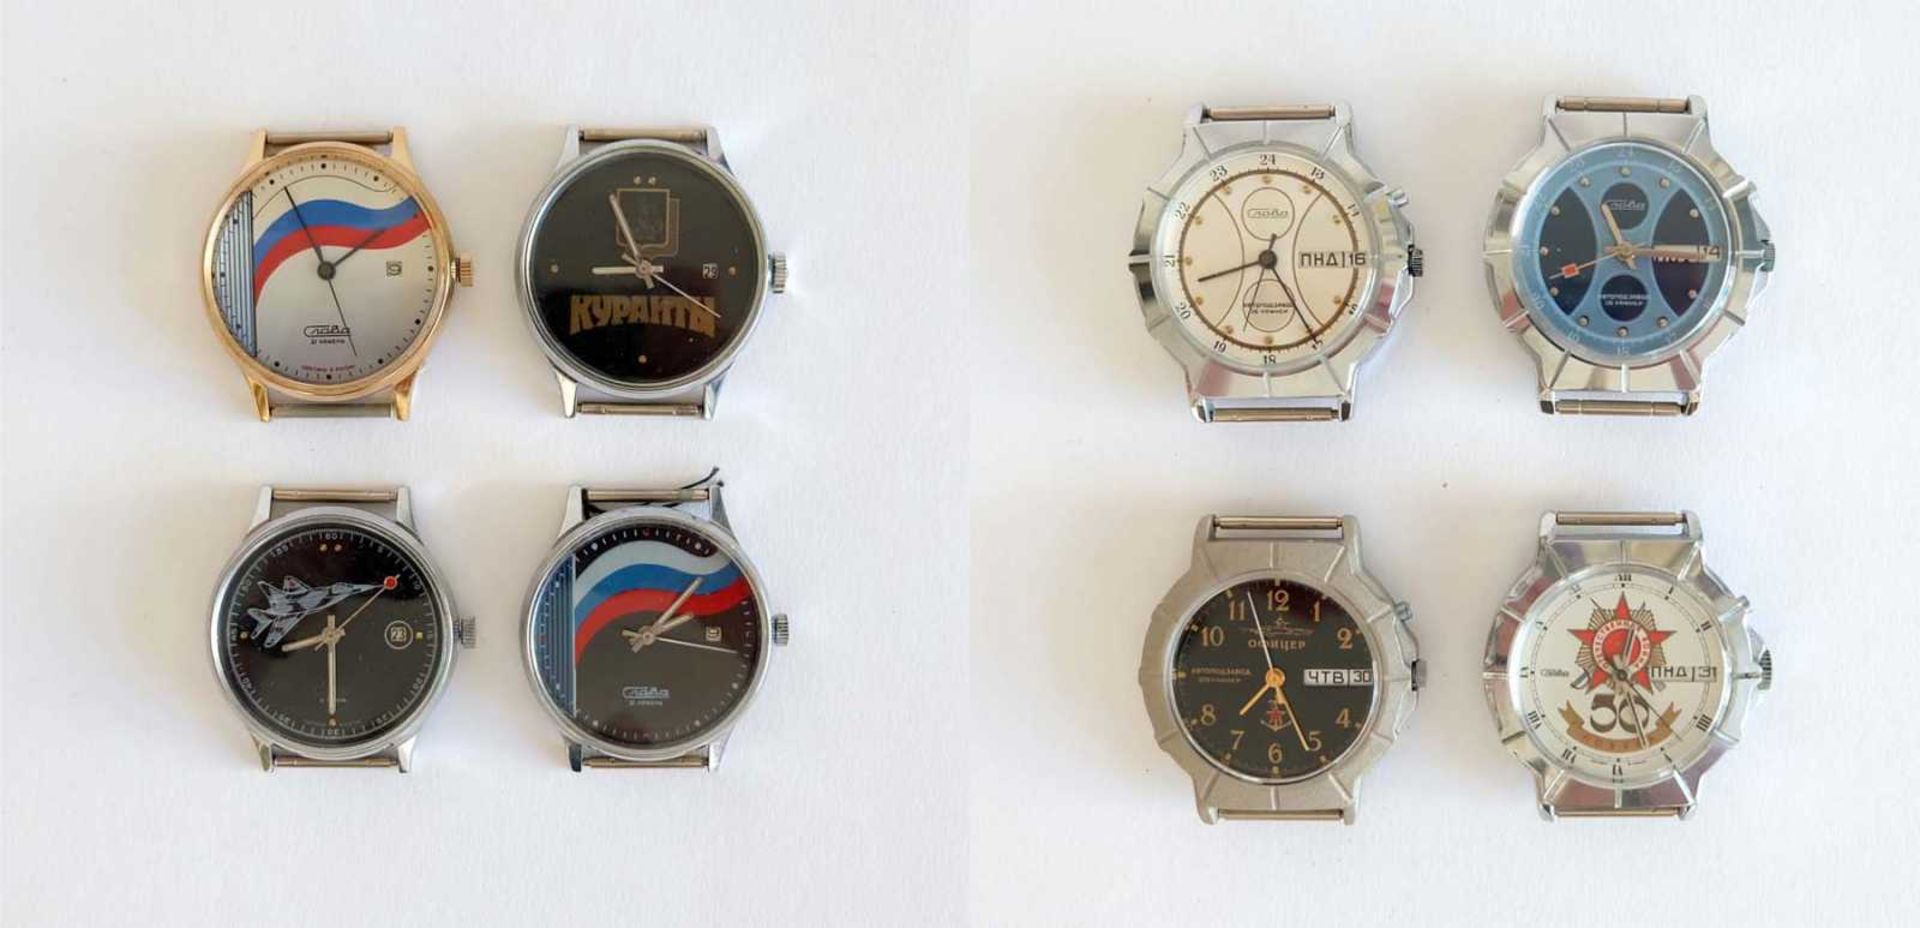 HAU, Konvolut von 8, Herst. Erste Moskauer Uhrenfabrik Slawa, Handaufzug bzw. Automatik, tl 26